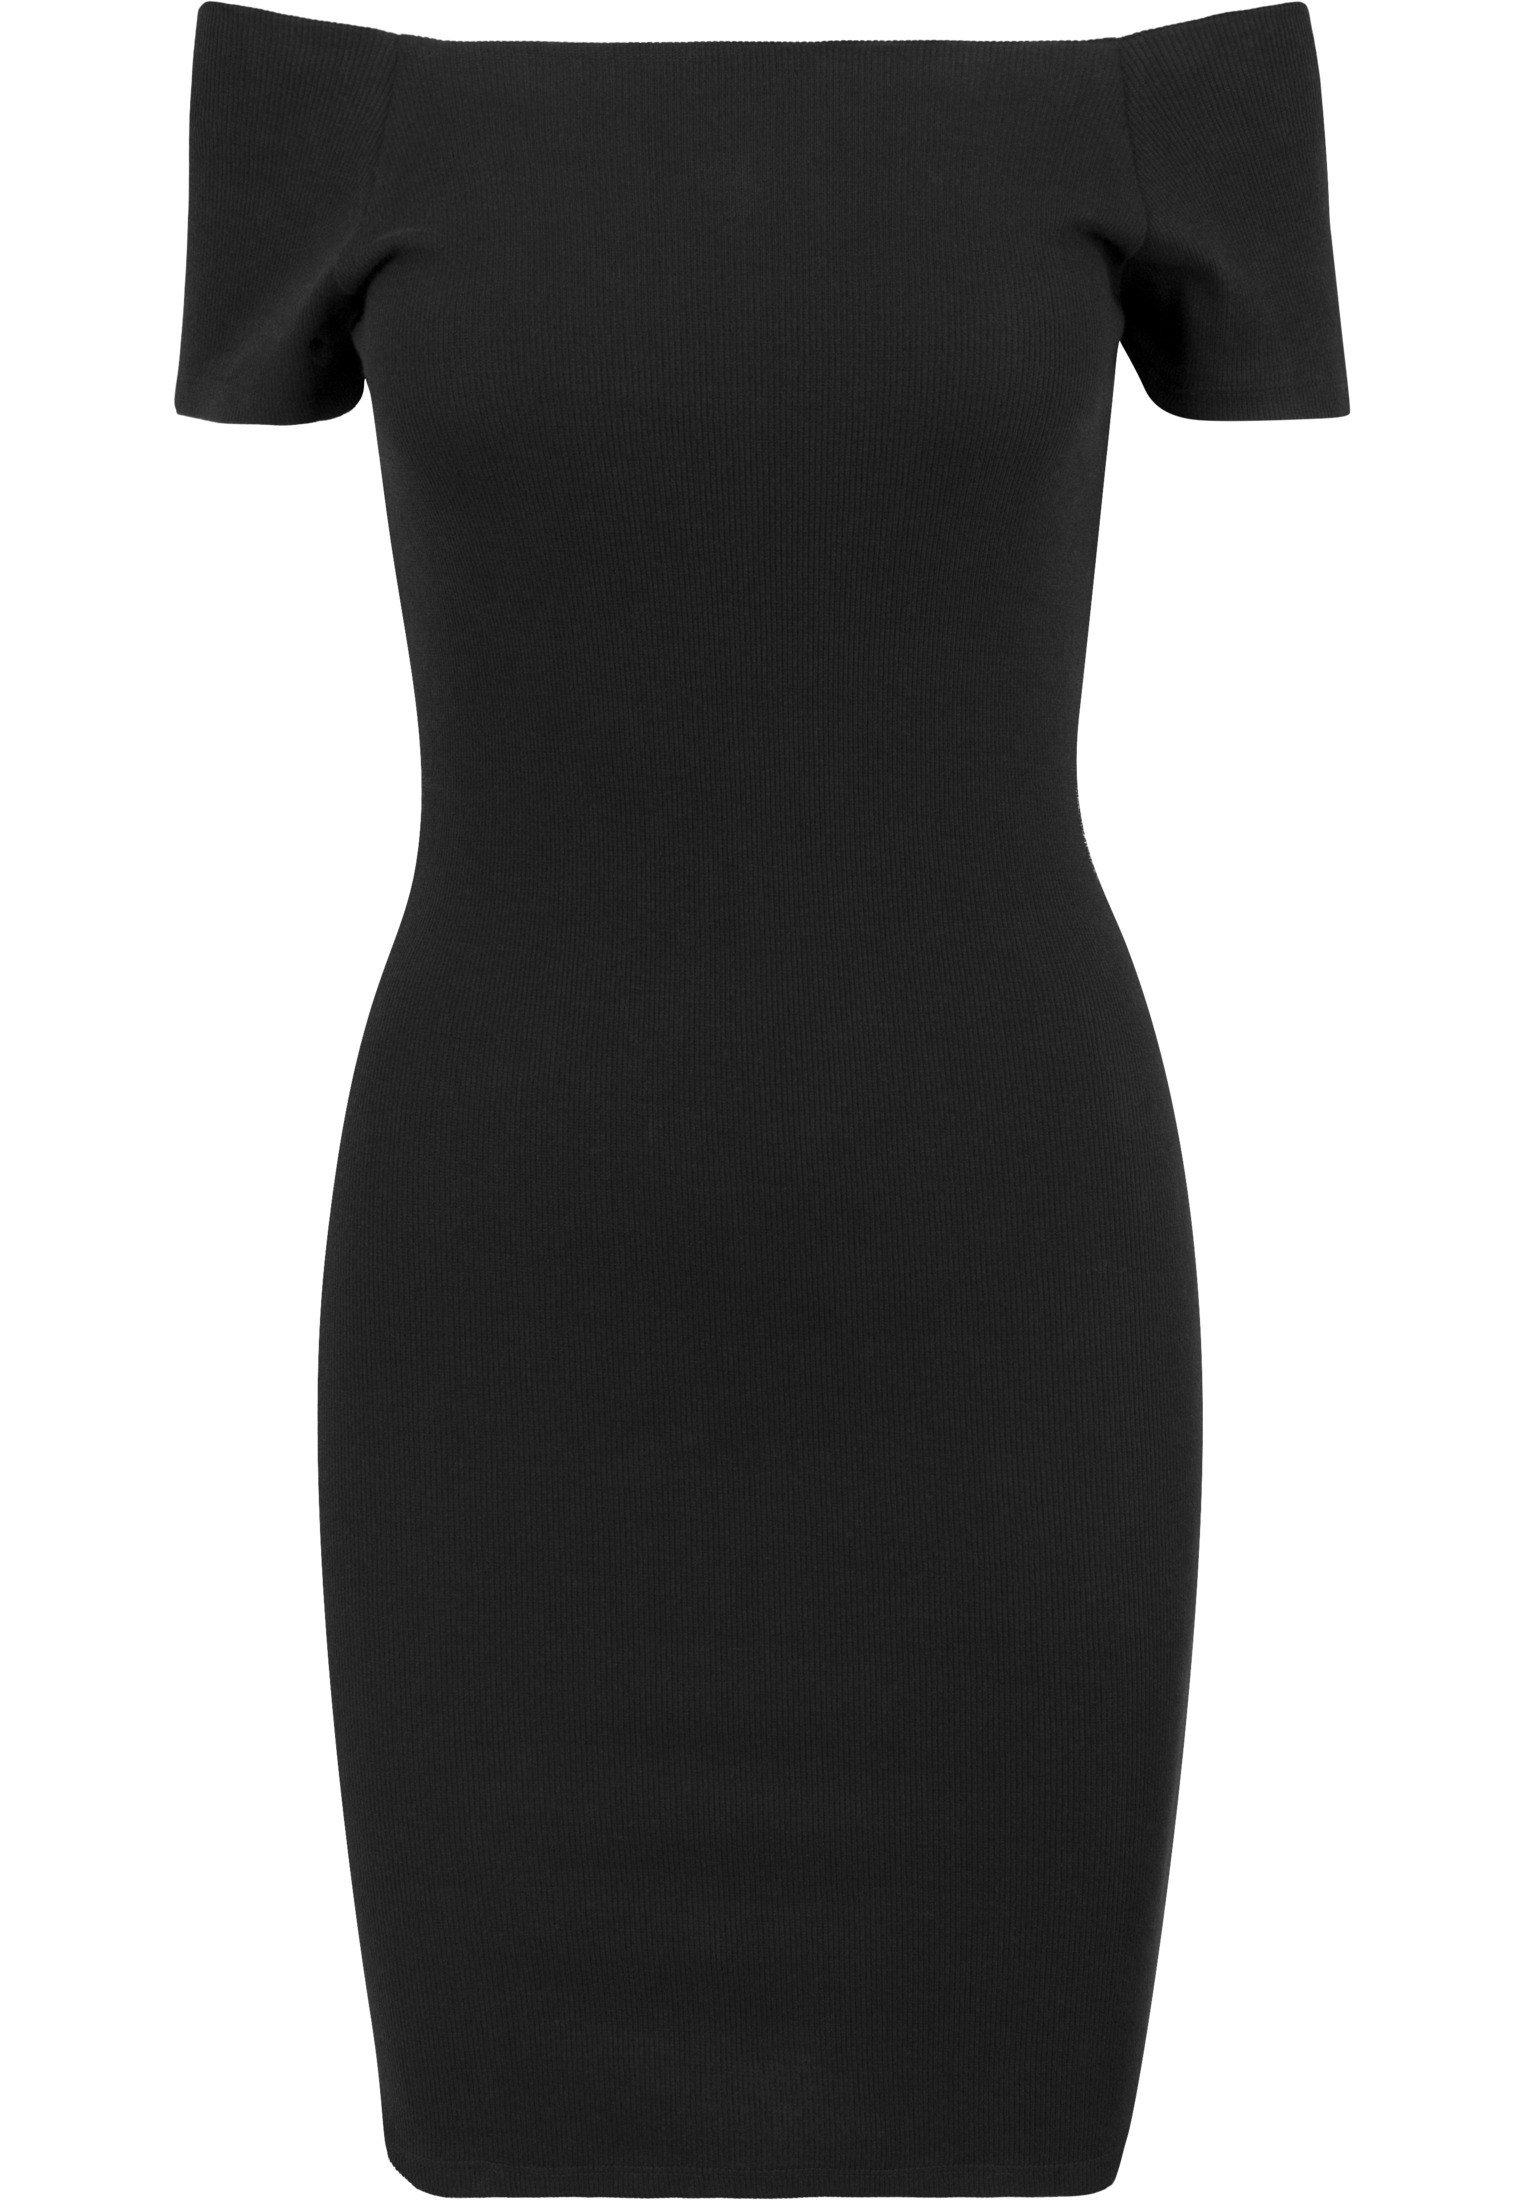 Kleider & R?cke Ladies Off Shoulder Rib Dress in Farbe black